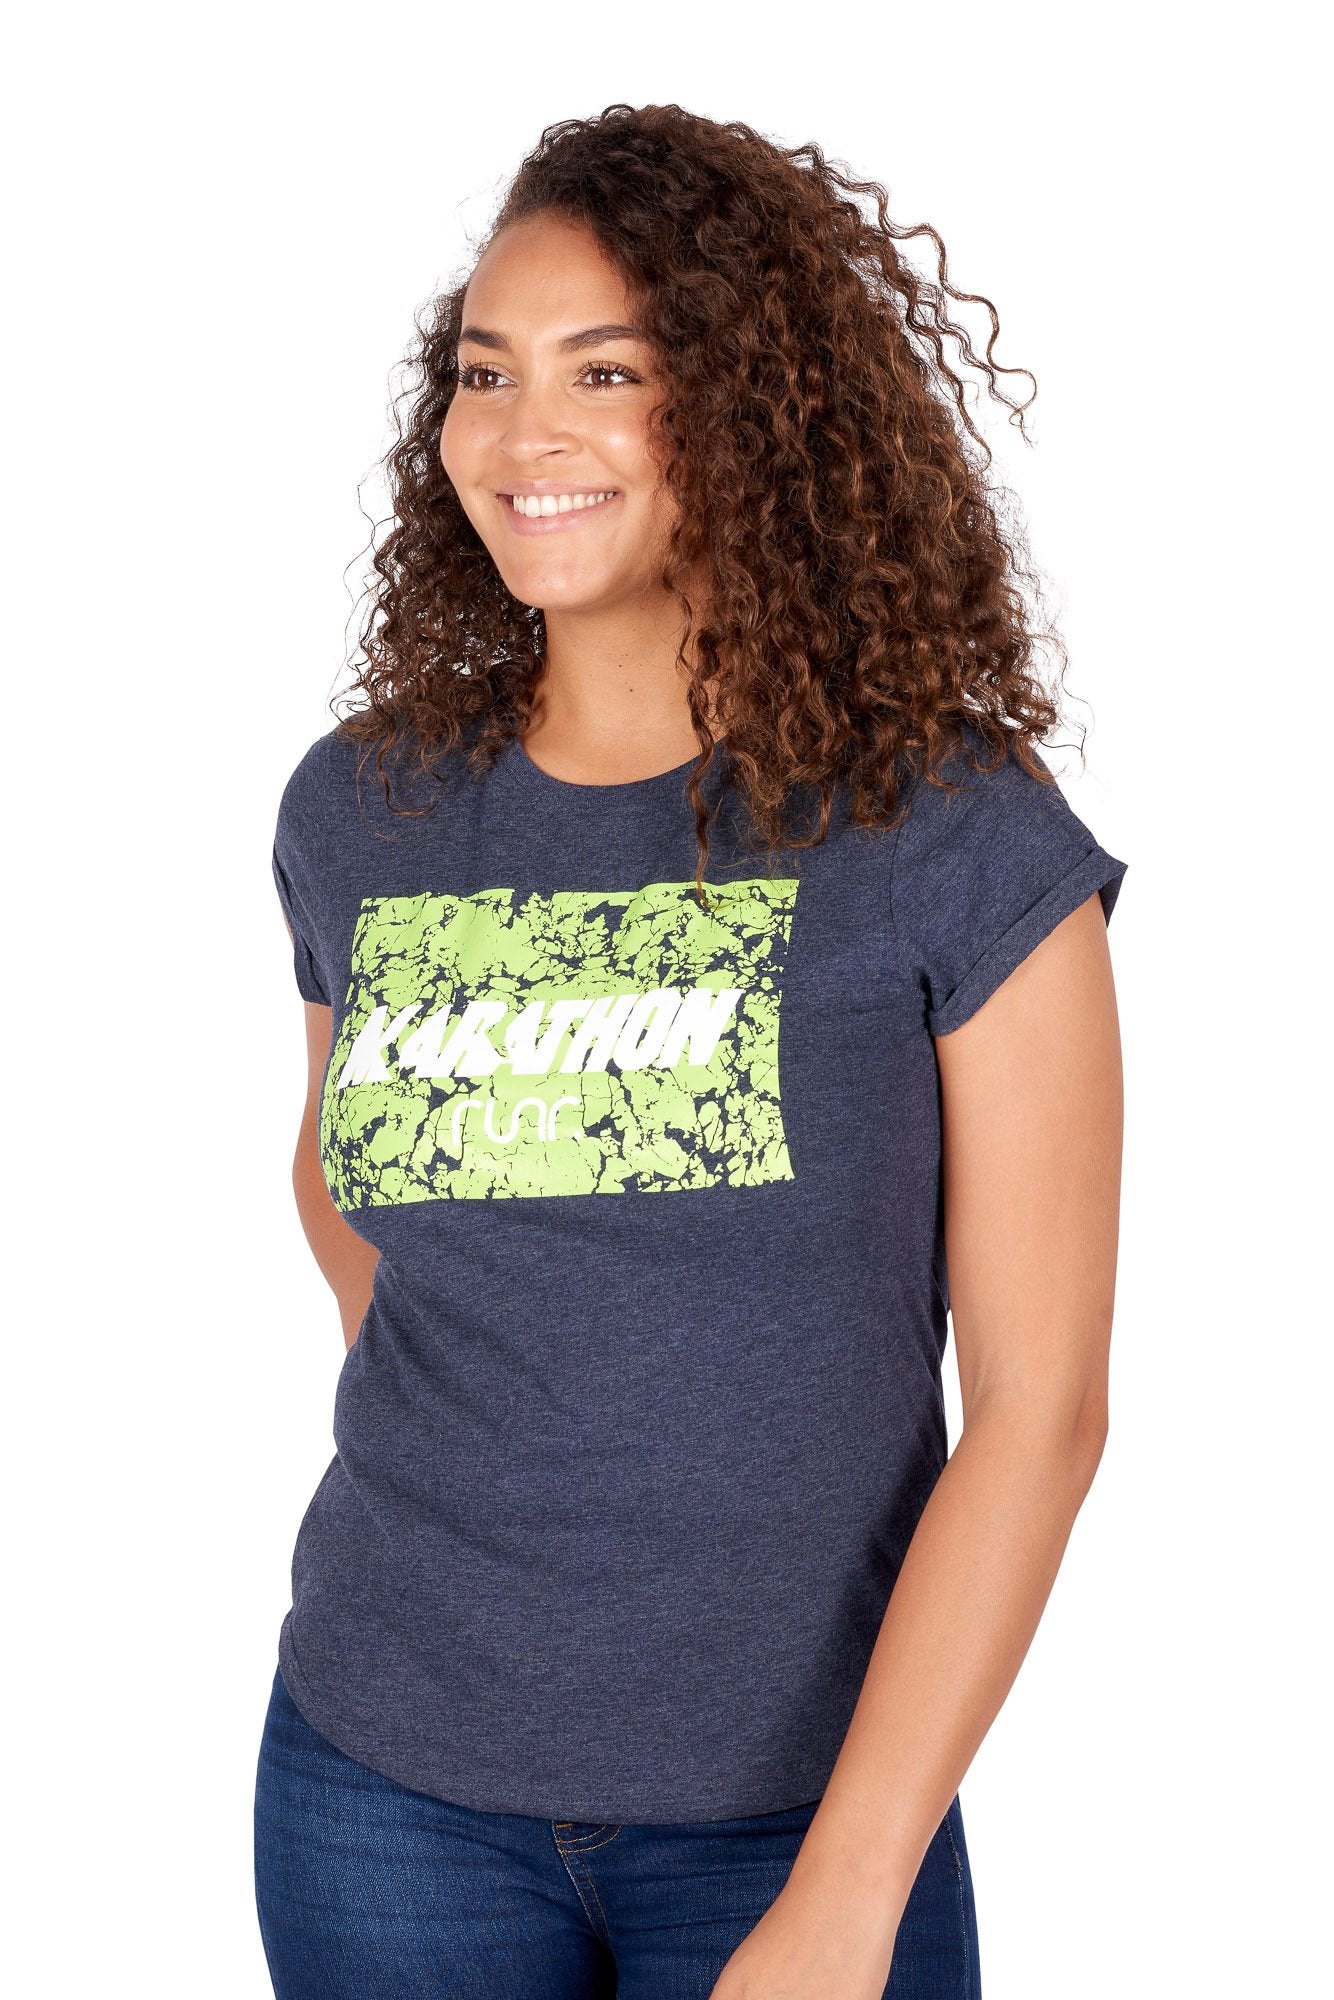 Women's Marathon Runr T-Shirt - Navy & Green